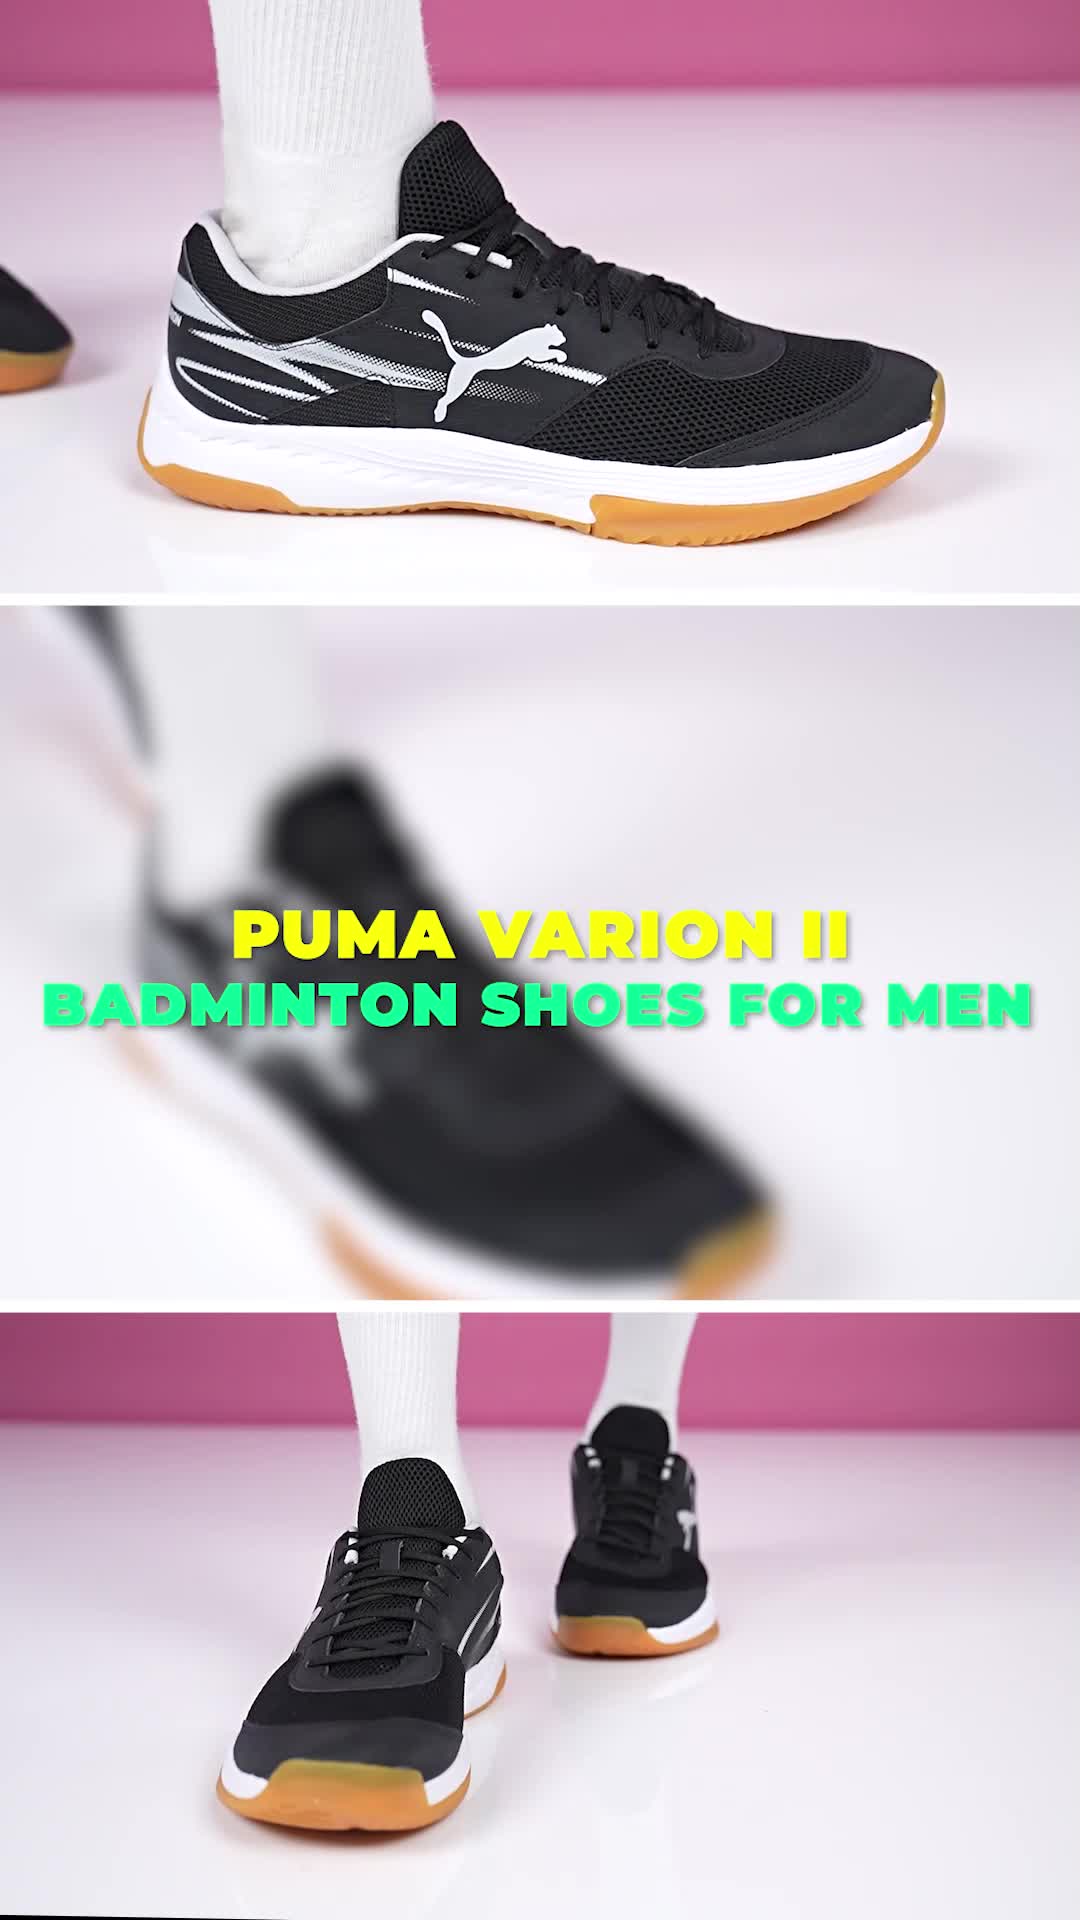 PUMA Varion II Best For Badminton Shoes Badminton II India - Online Footwears Buy for - Price at Varion Shop Men Men Online Shoes PUMA For in